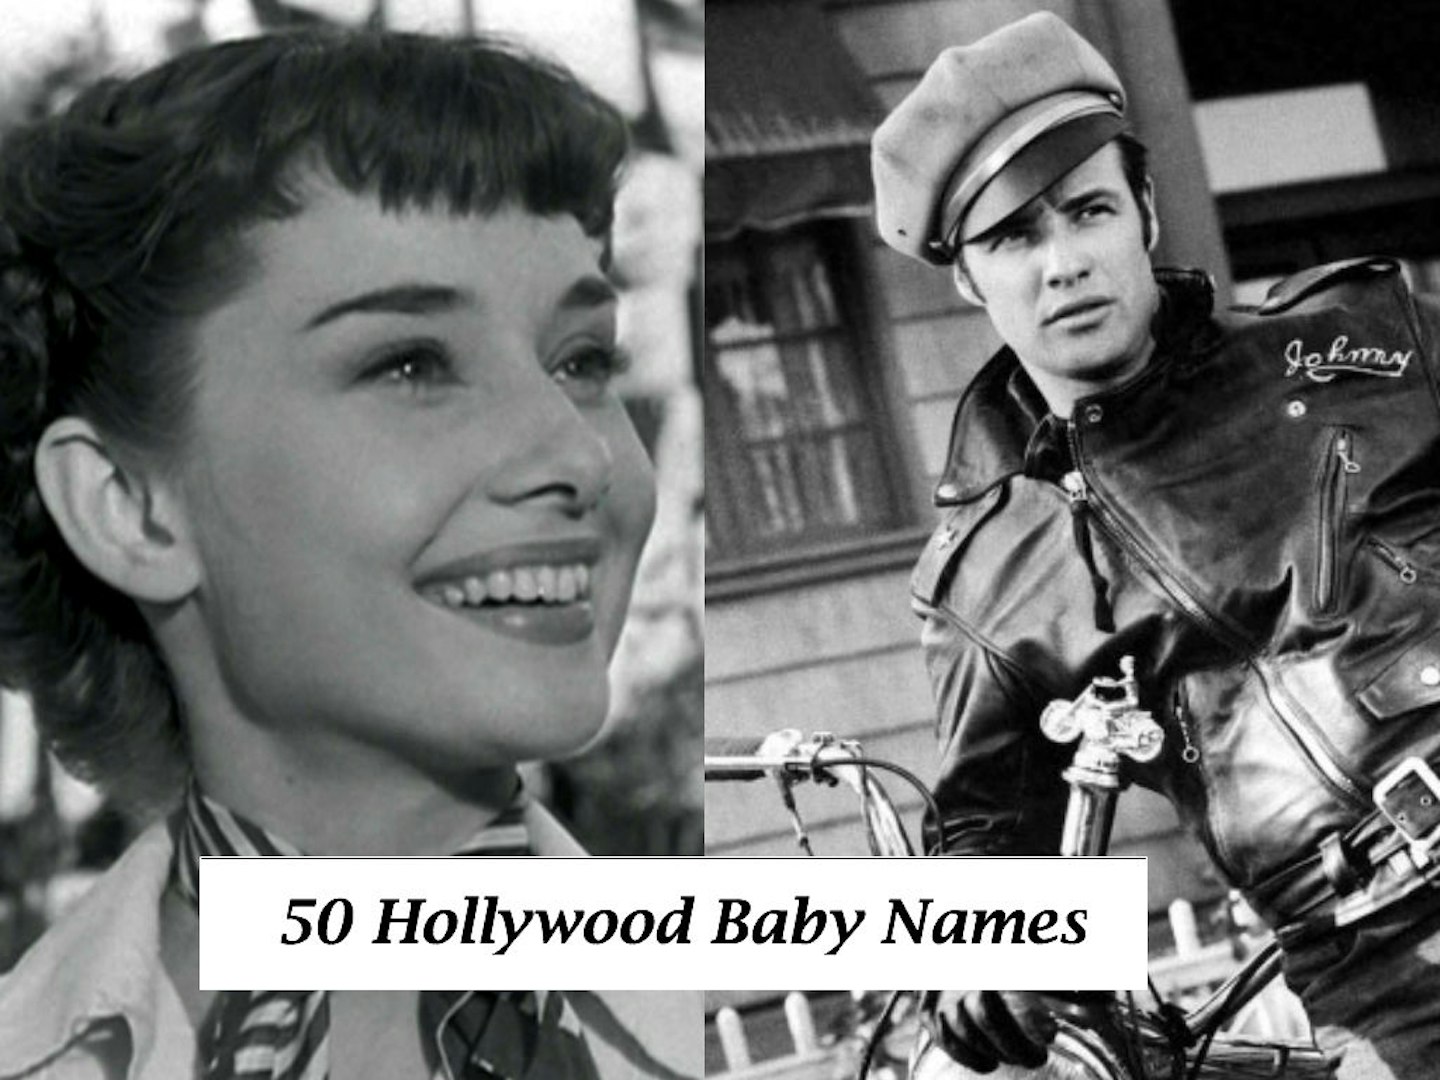 Hollywood baby names